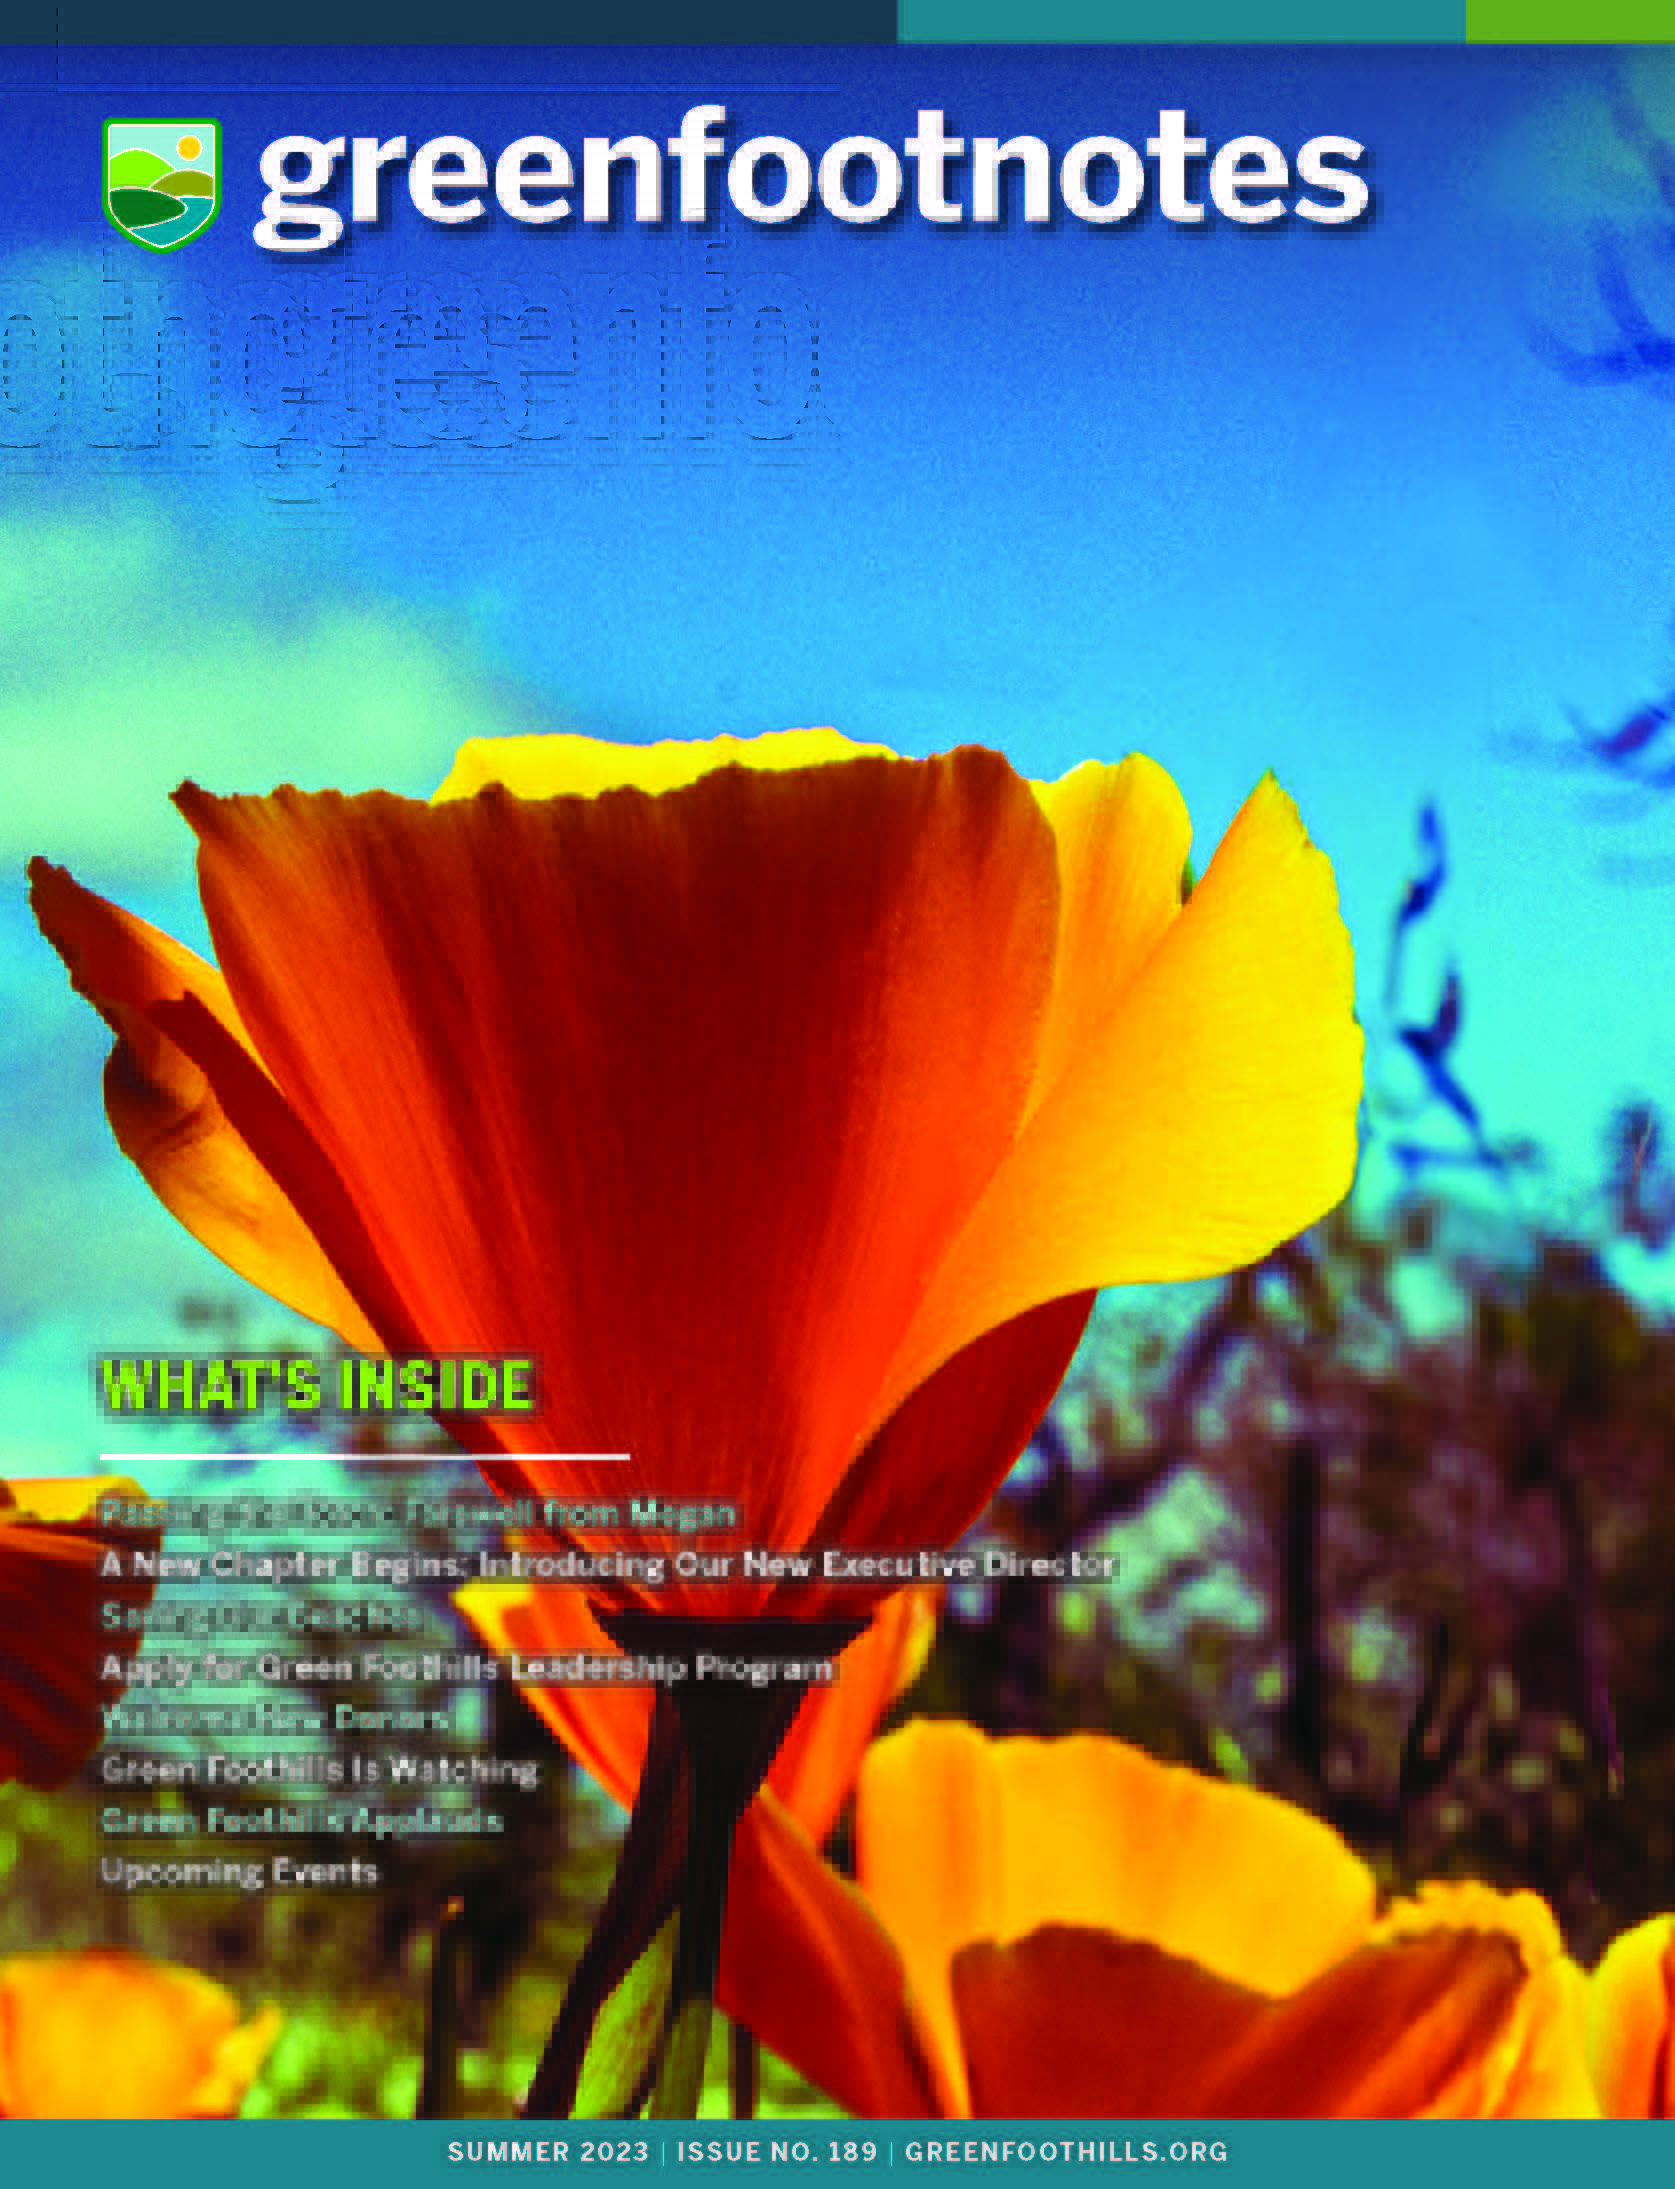 Summer Newsletter 2023 cover with image of California golden poppy